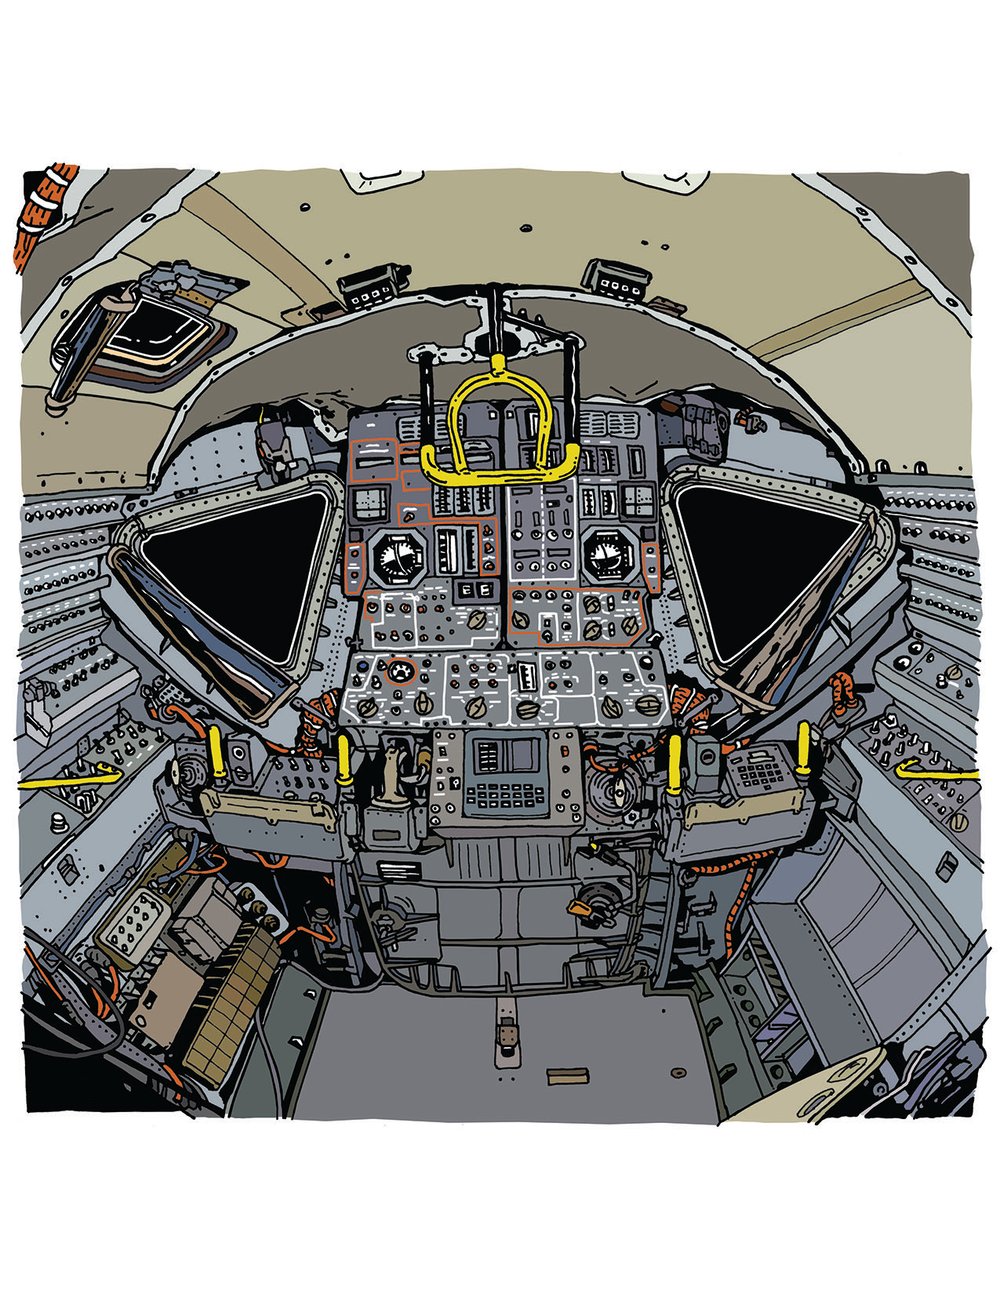 Image of Lunar Excursion Module print